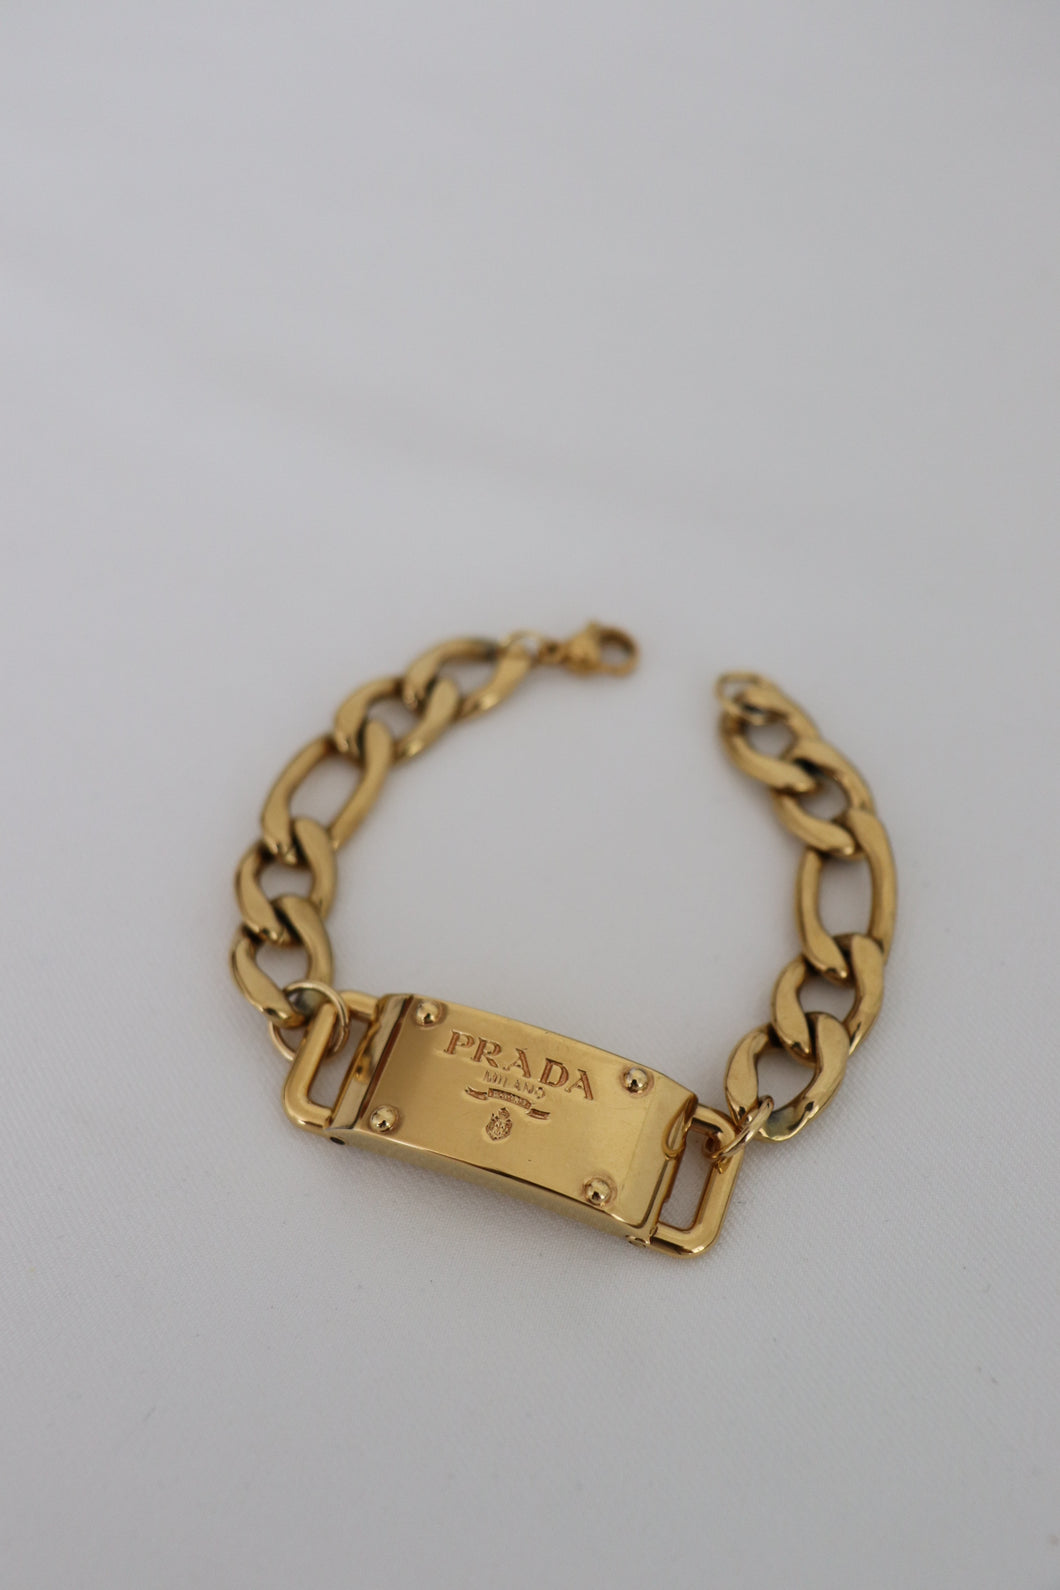 Prada golden bracelet